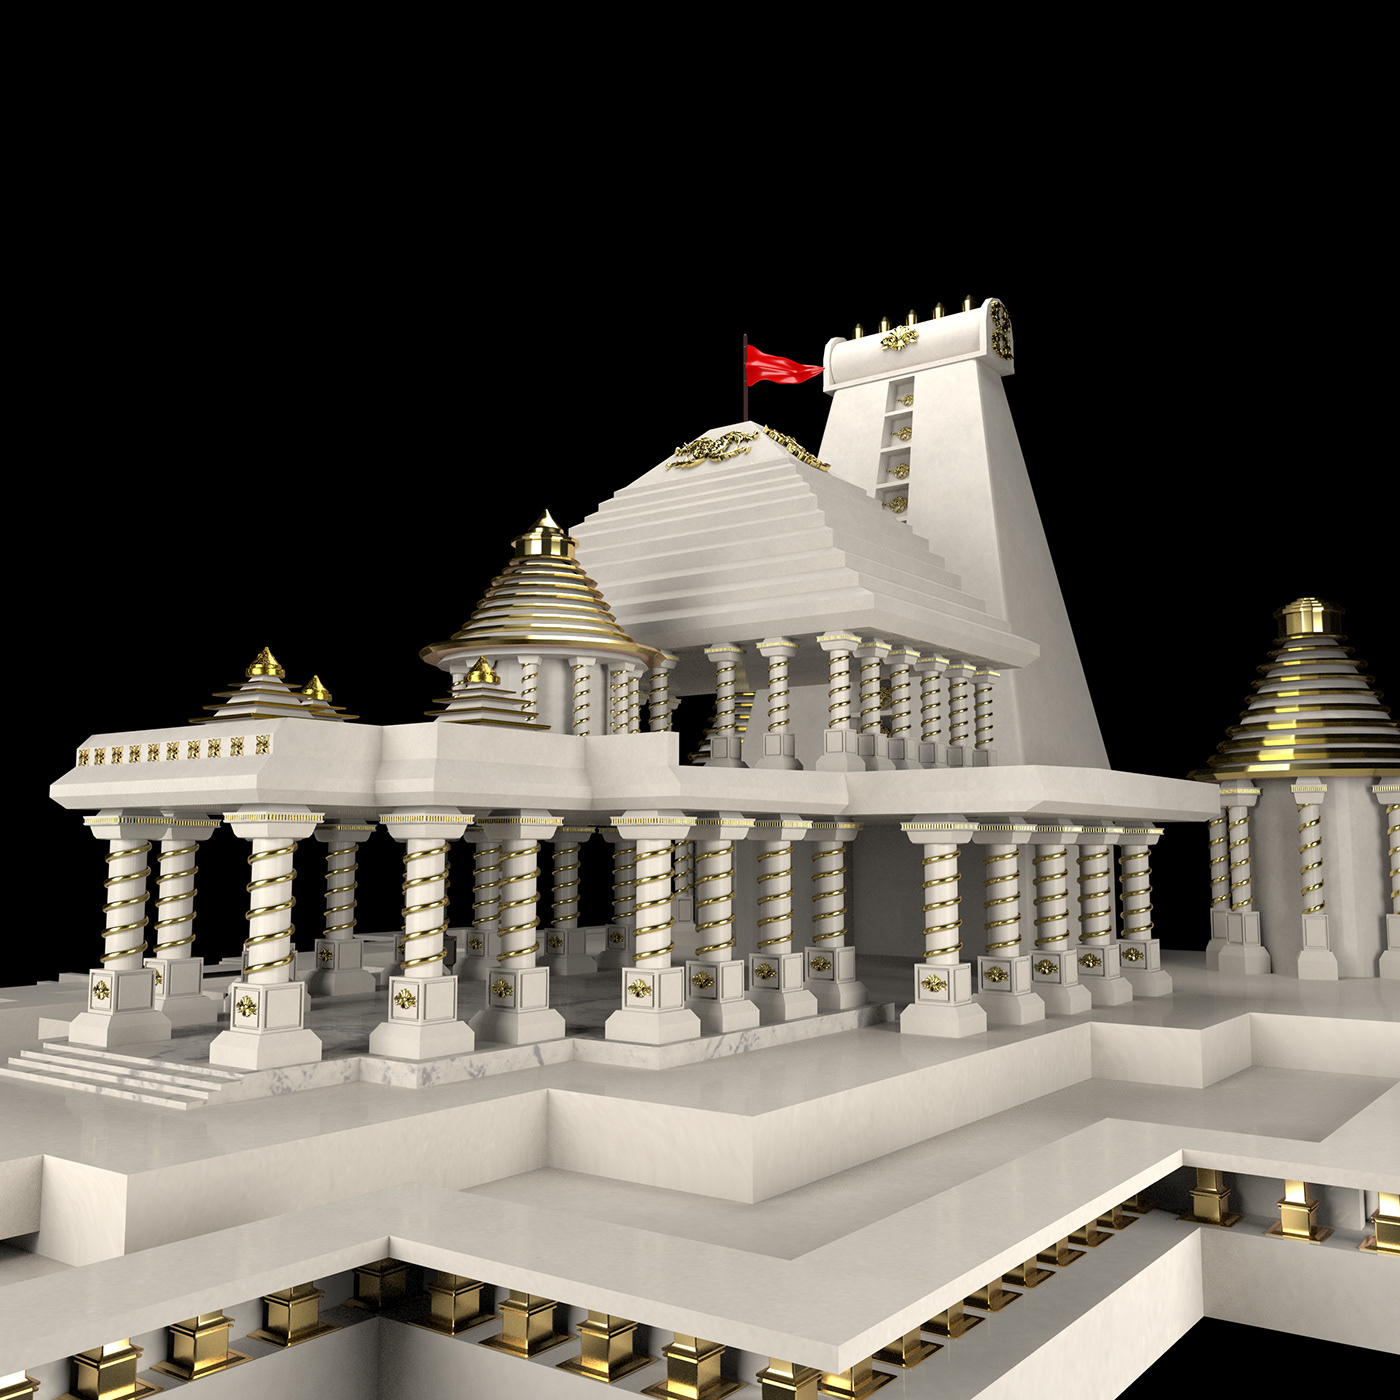 3dmodeling Maya 3D substancepainter rendering arnold hindutemple